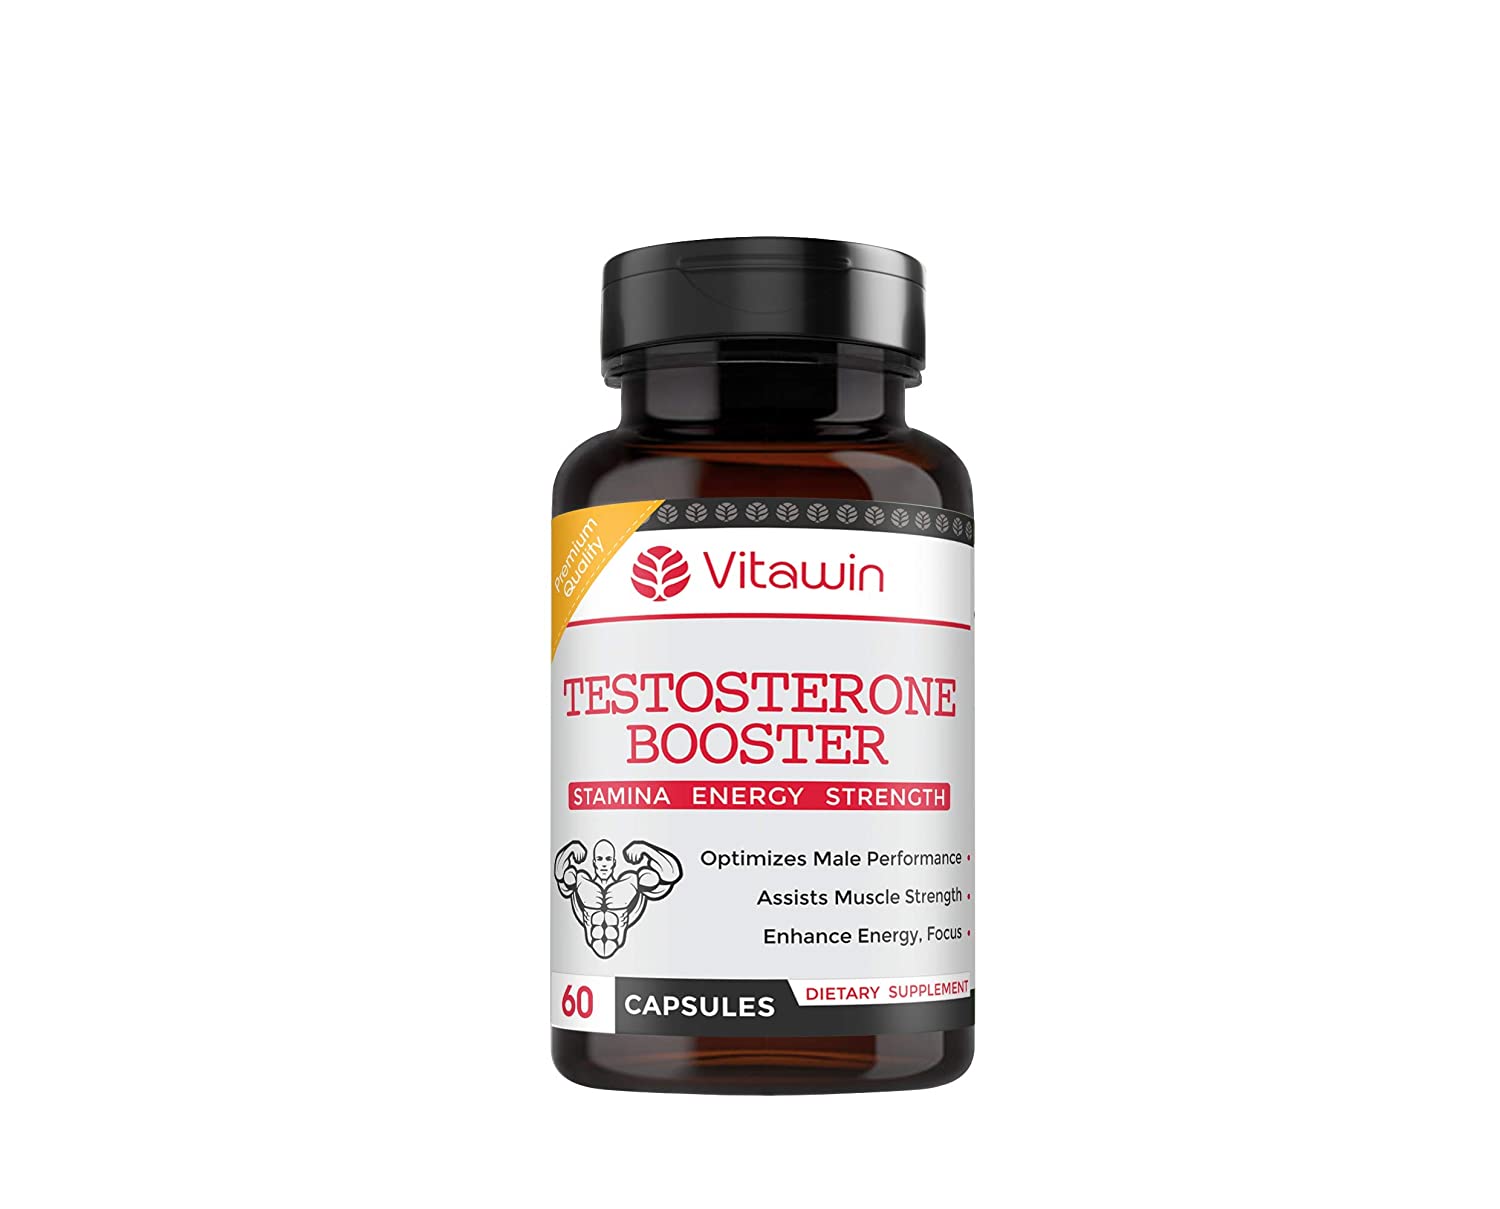 Vitawin Testosteron Booster Capsules Image